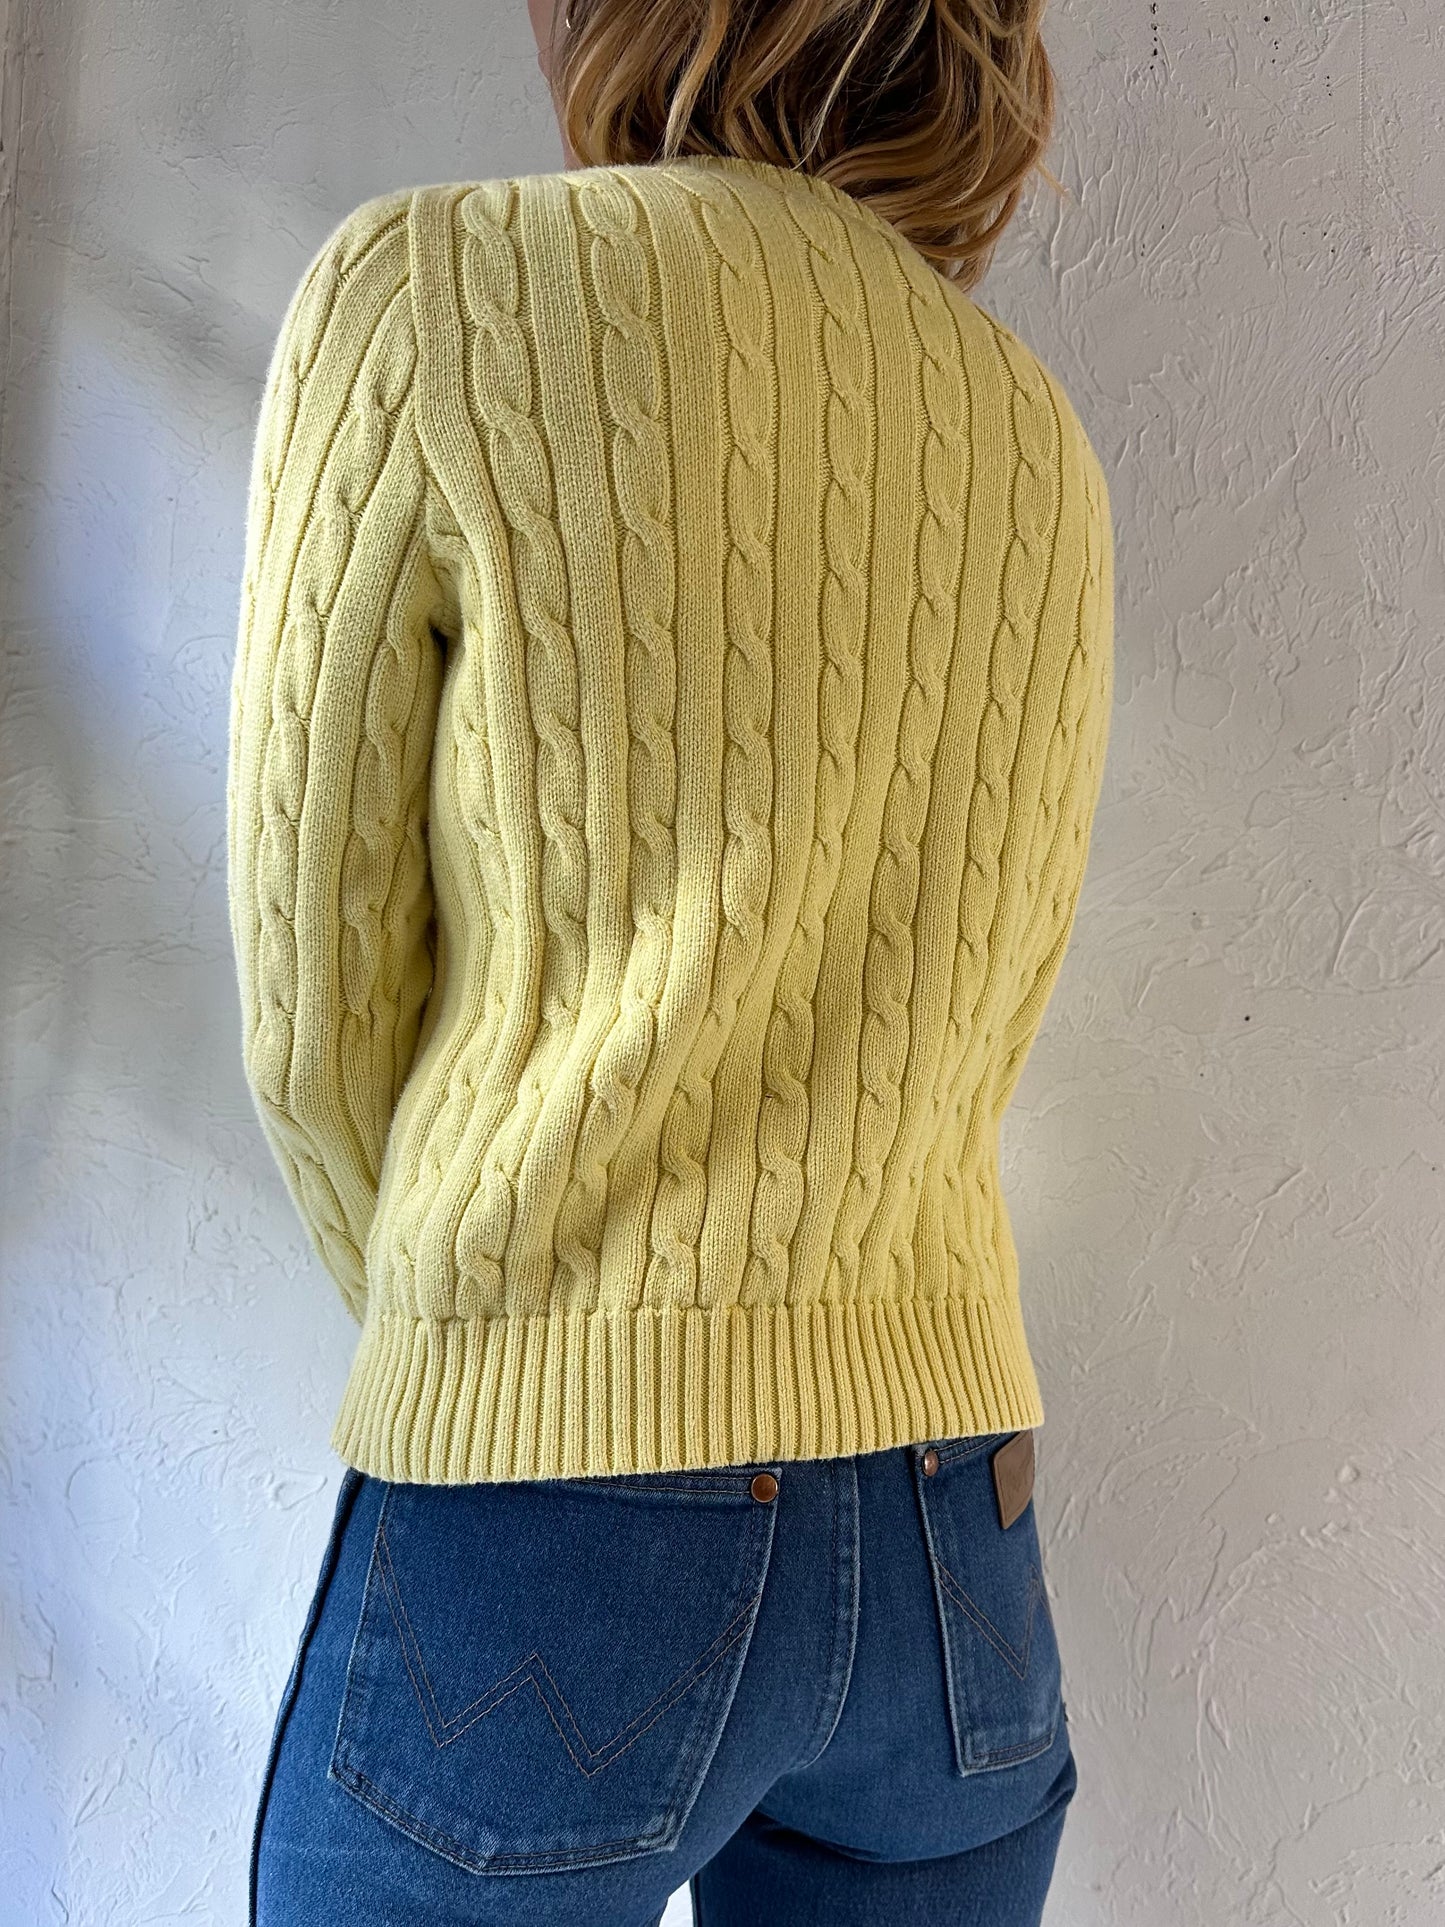 Y2k 'Ralph Lauren' Yellow Cable Knit Sweater / Medium